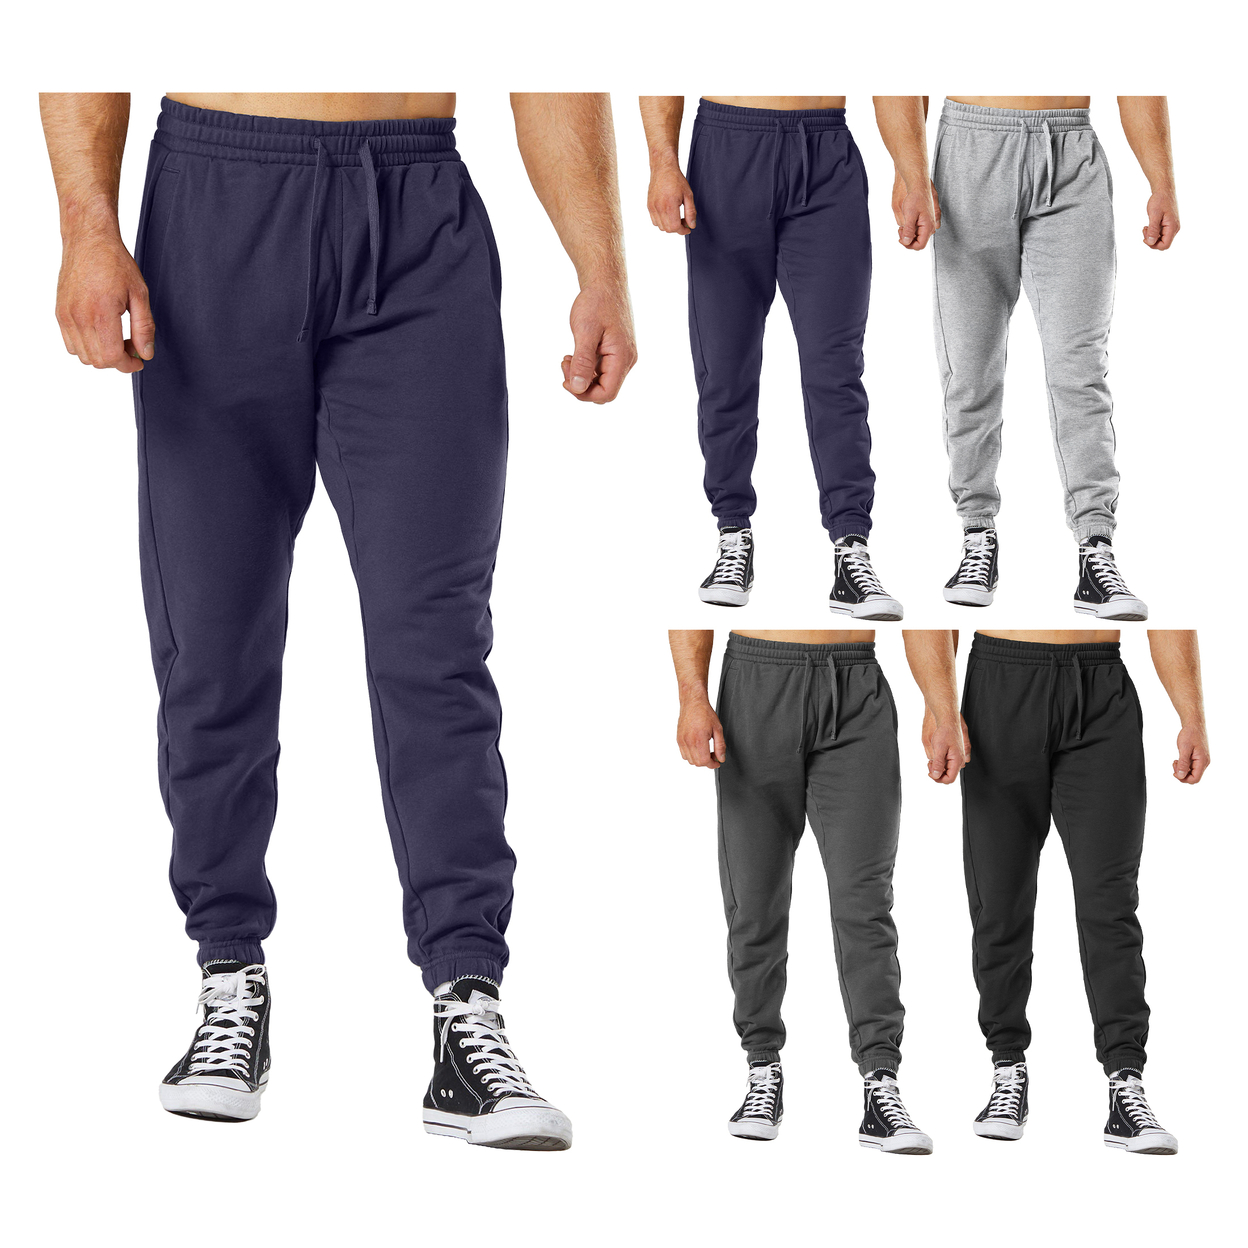 2-Pack: Men's Ultra-Soft Cozy Winter Warm Casual Fleece-Lined Sweatpants Jogger - Black & Navy, Medium